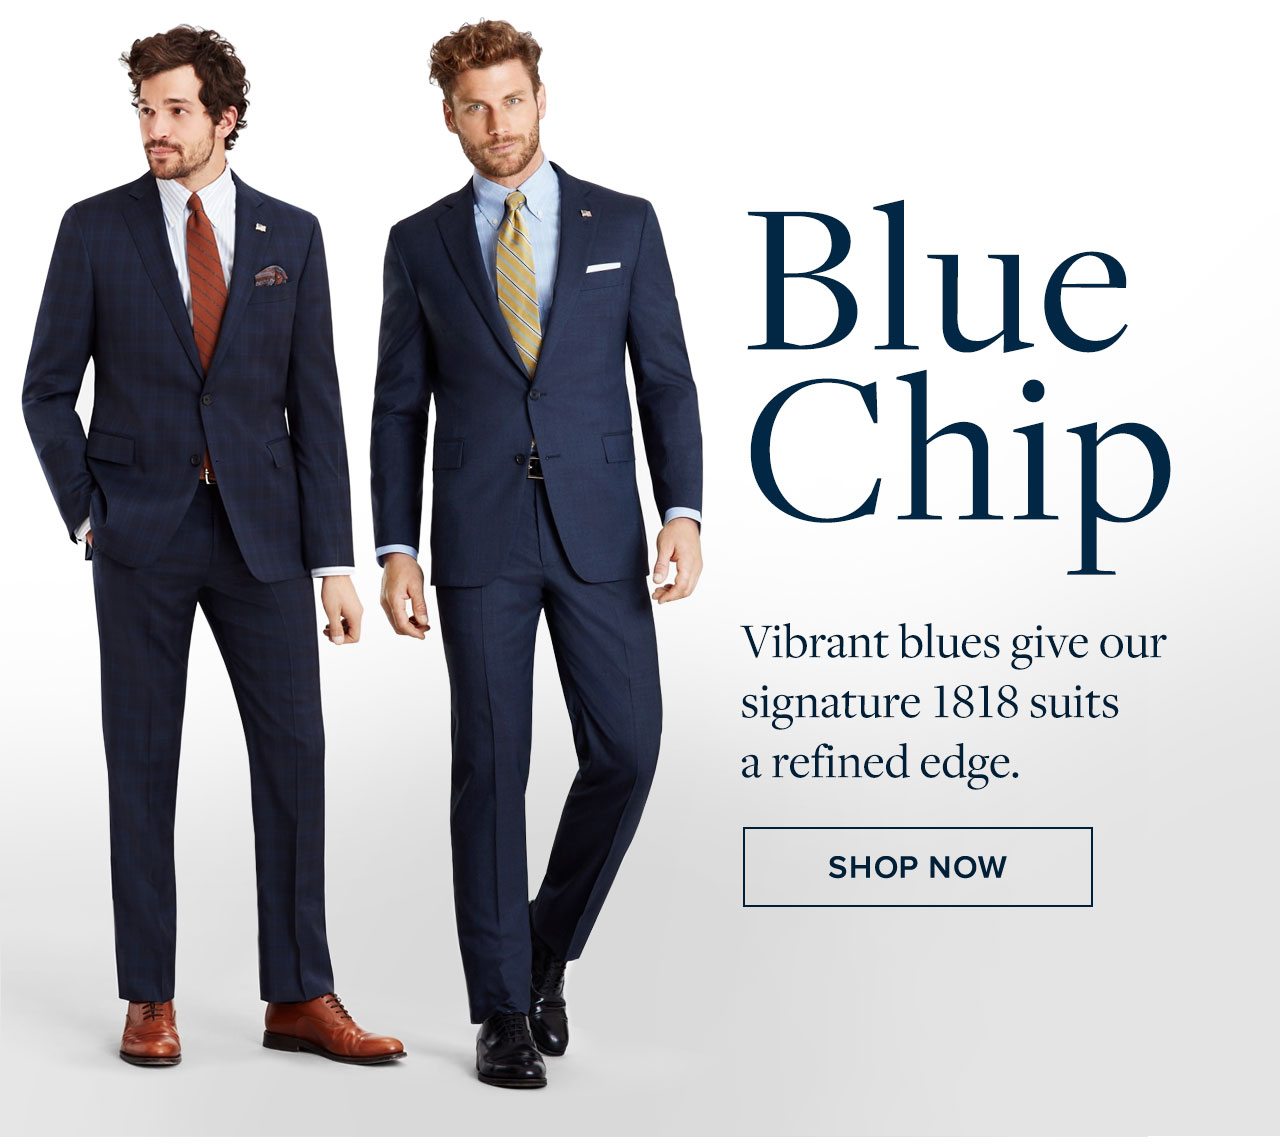 Blue Chip - Vibrant blues give our signature 1818 suits a refined edge. Shop Now